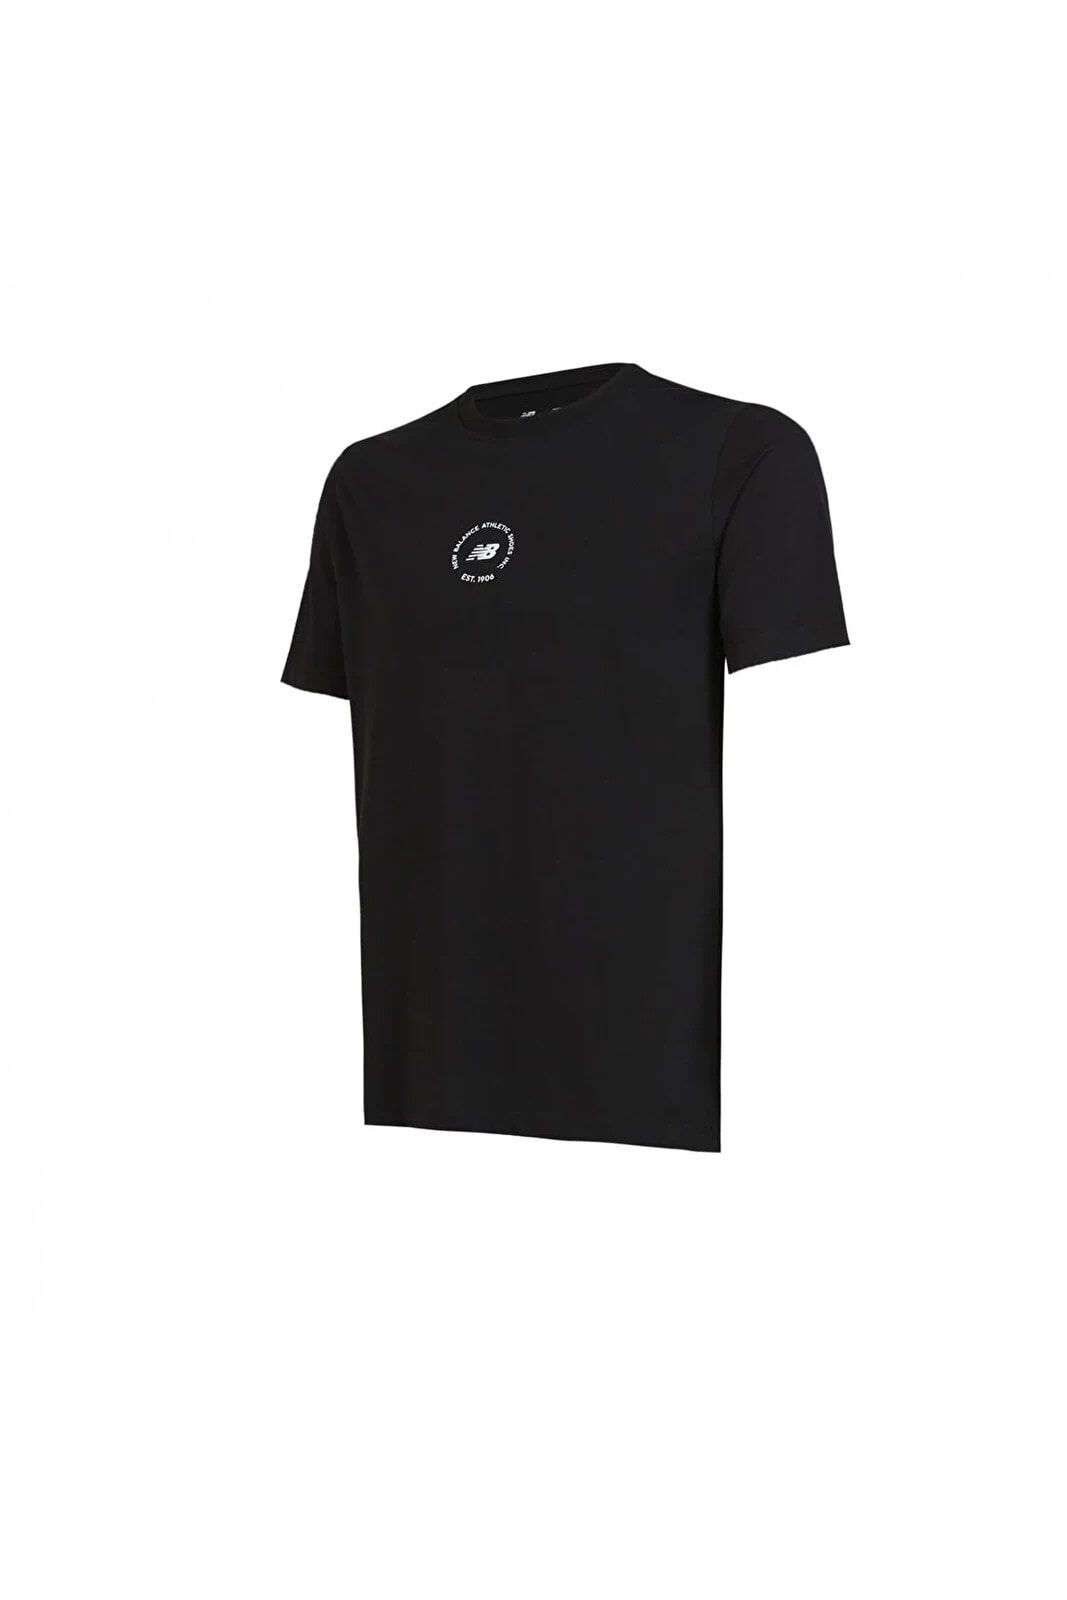 Lifestyle Siyah Unisex Tişört Unt1311-bk